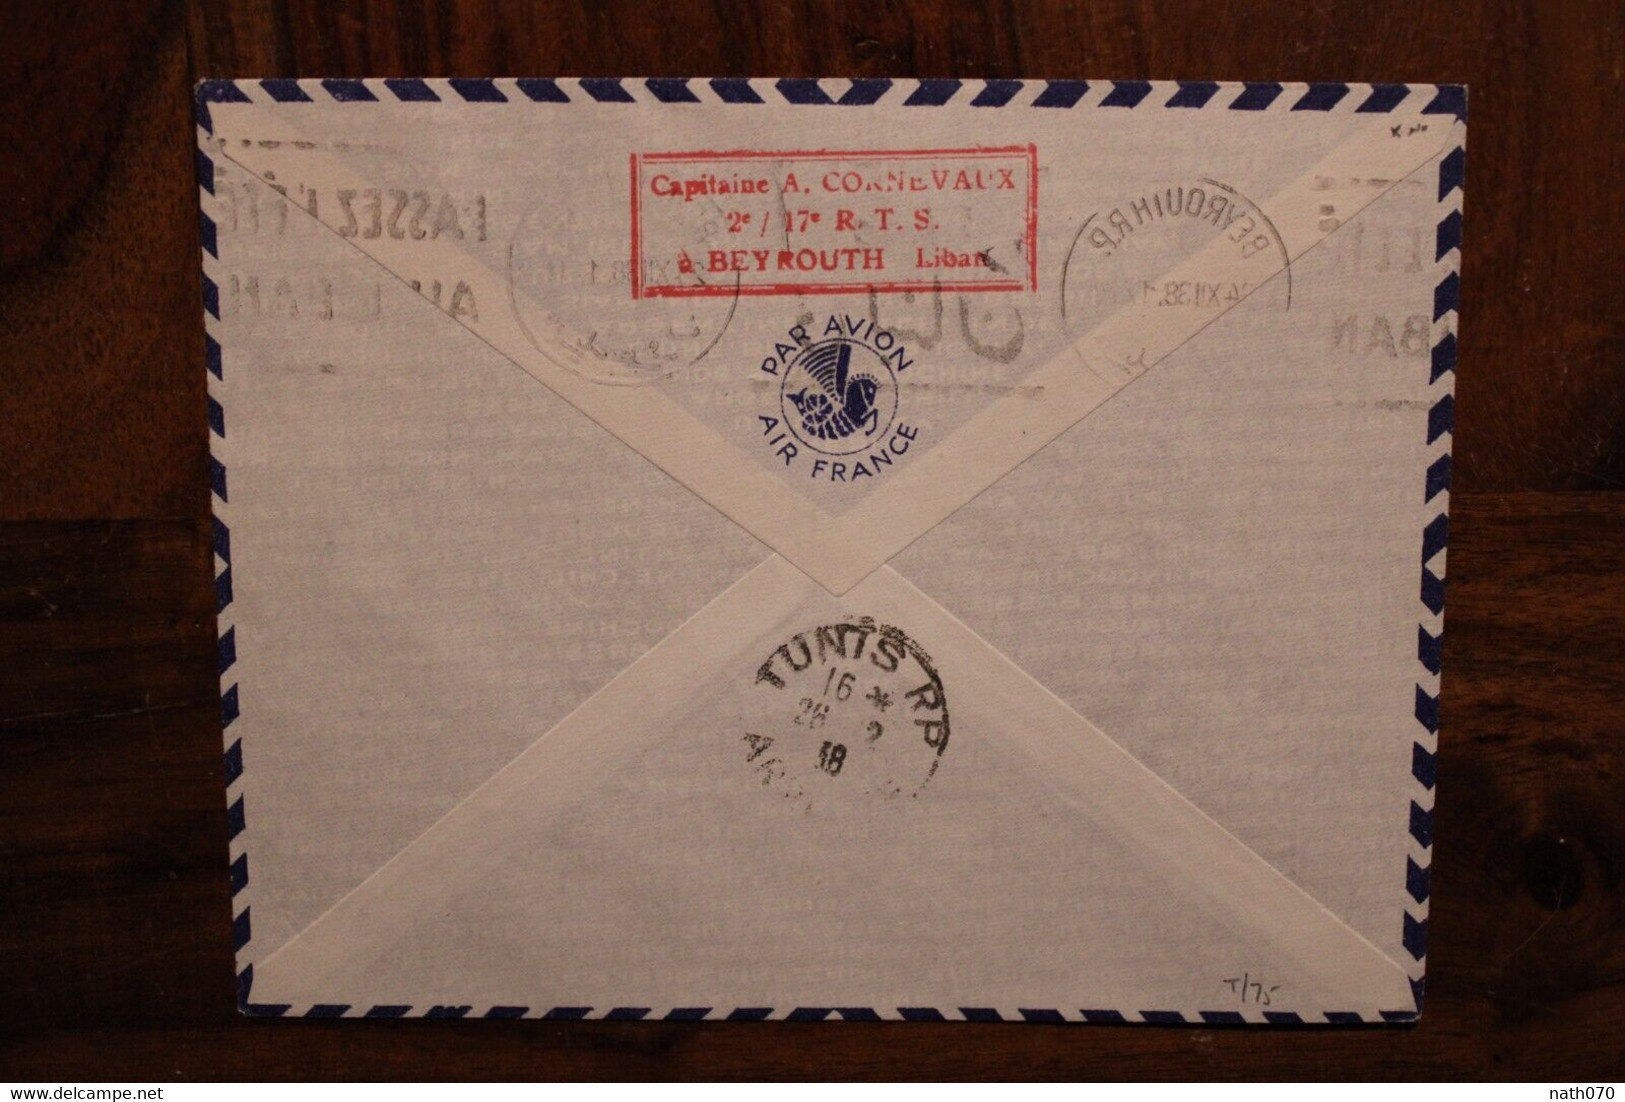 1938 Liban France Marseille Damas Syrie 1er Vol France Air Mail Cover Lebanon 1st Flight Via Tunisie - Lettres & Documents